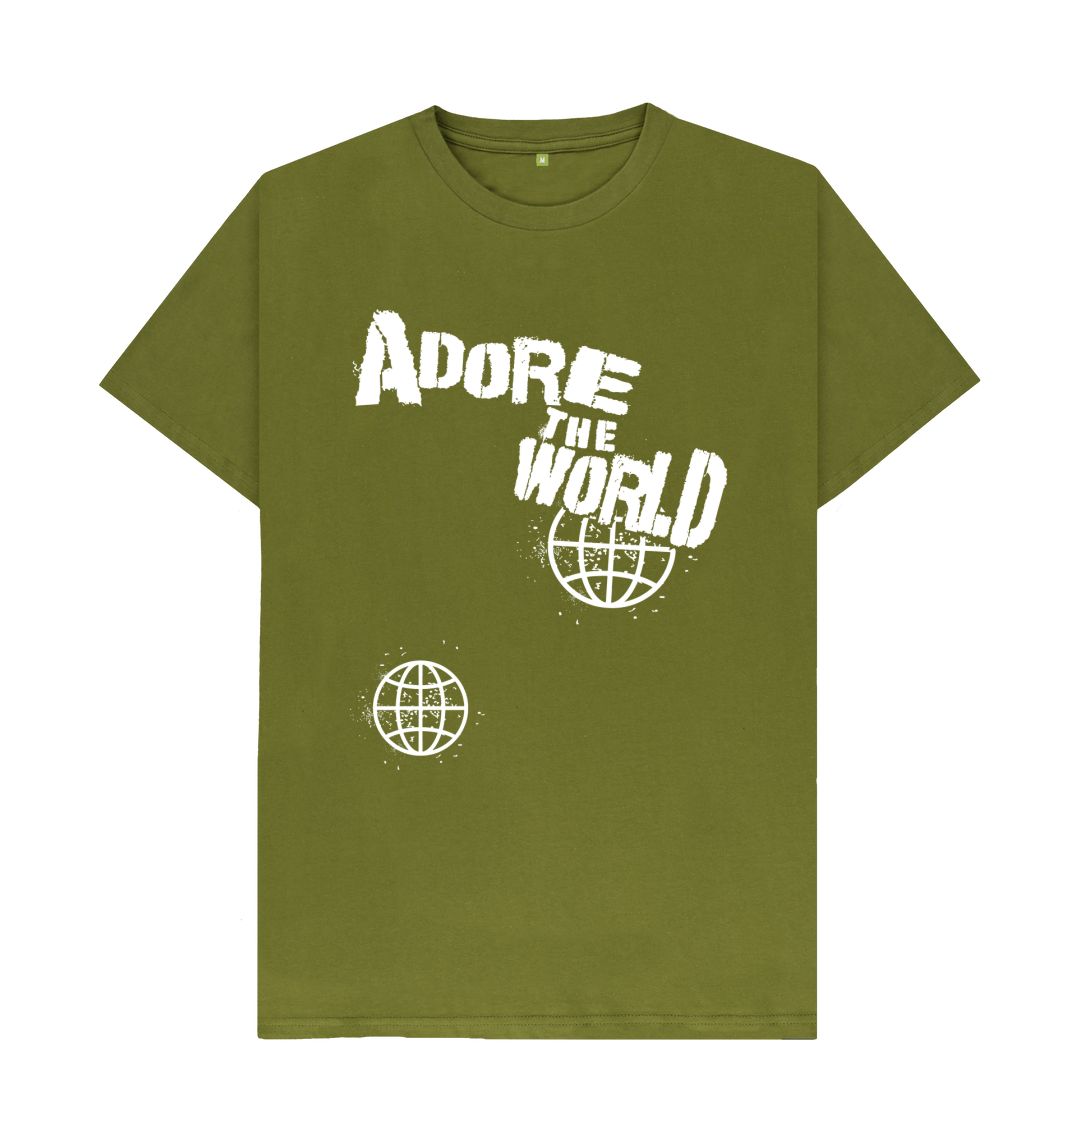 Moss Green Doobee Adore Textured World